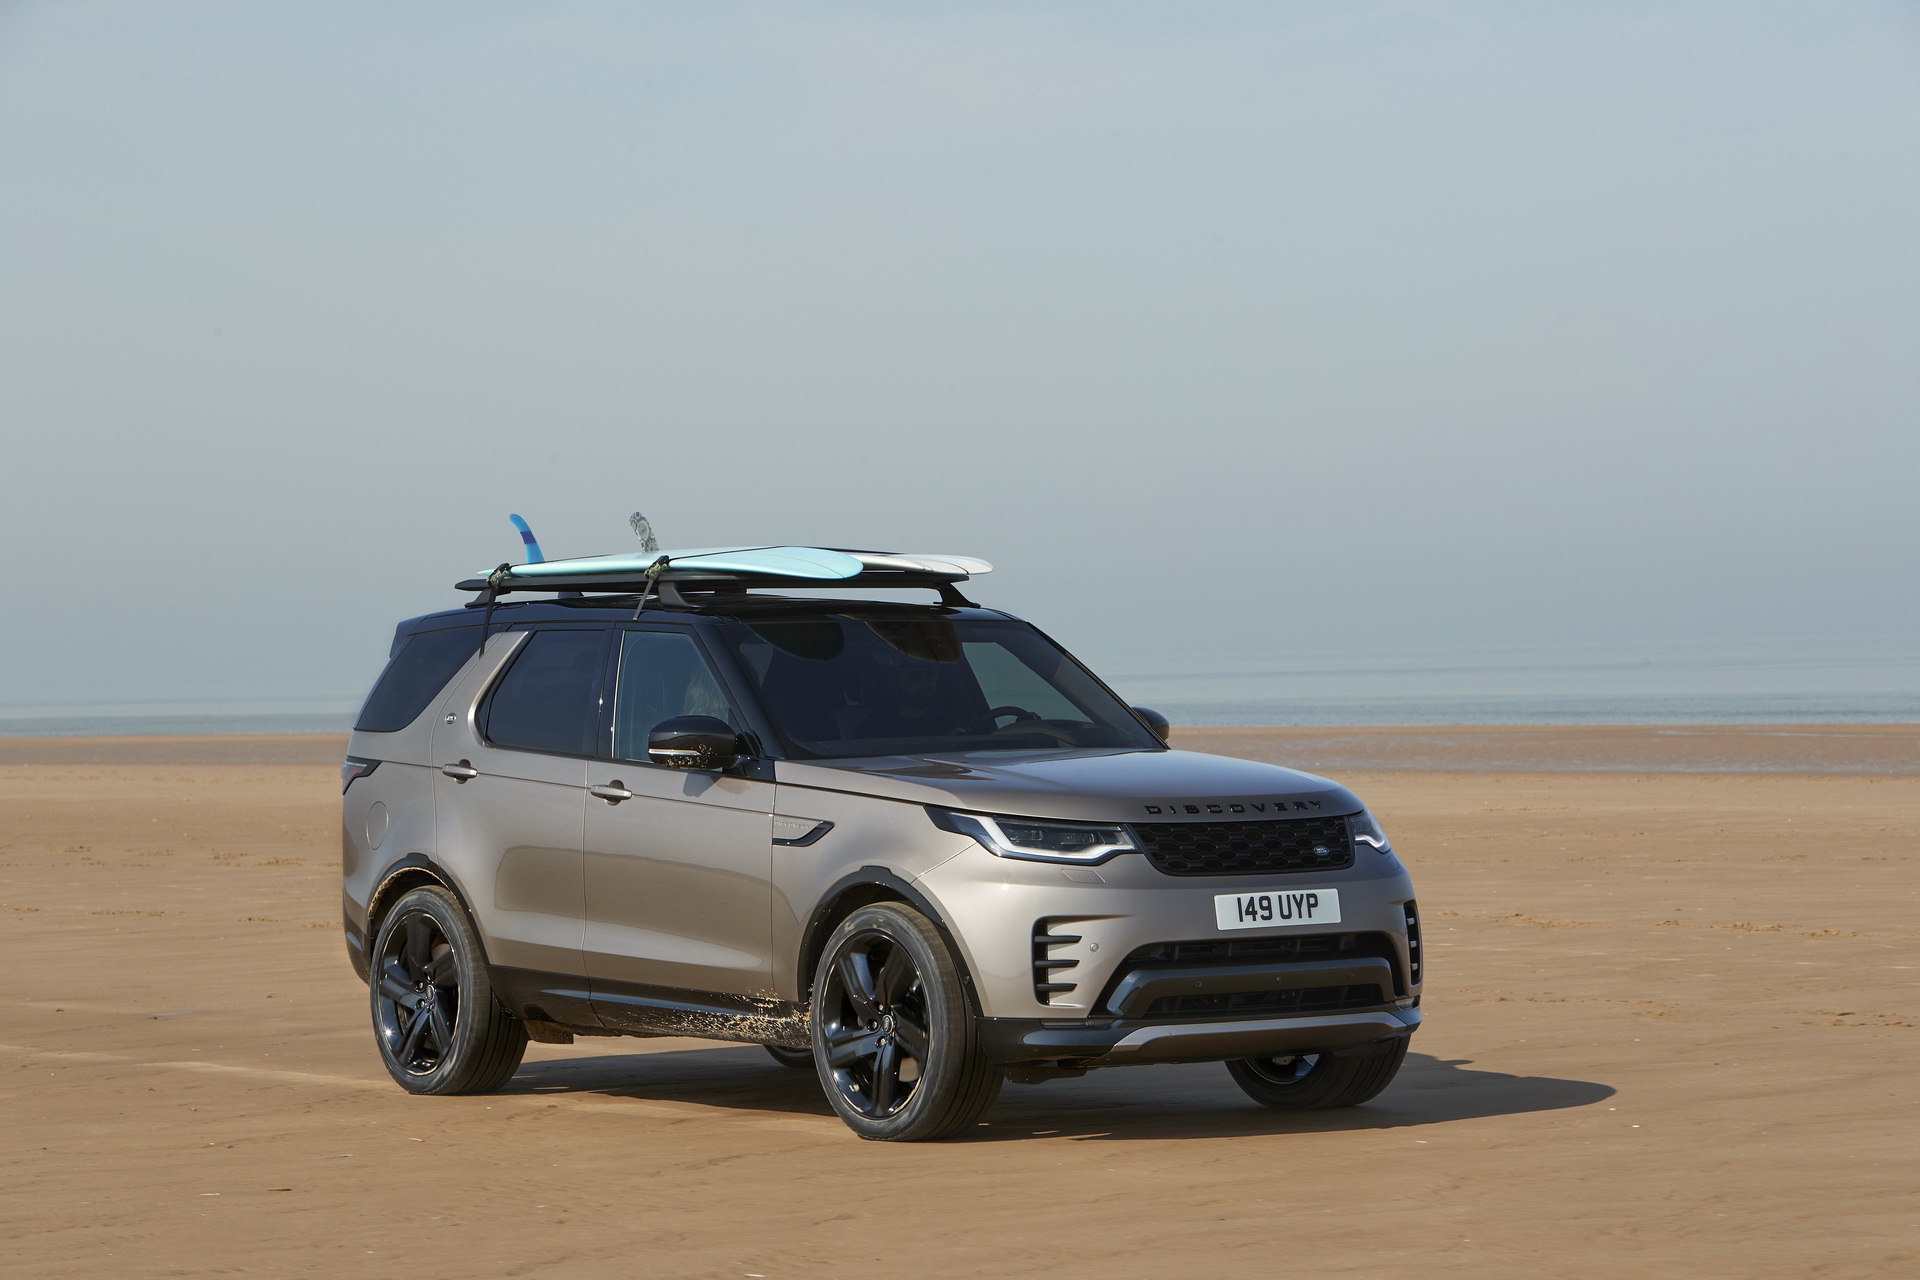 2021 Land Rover Discovery resim galerisi (11.11.2020)